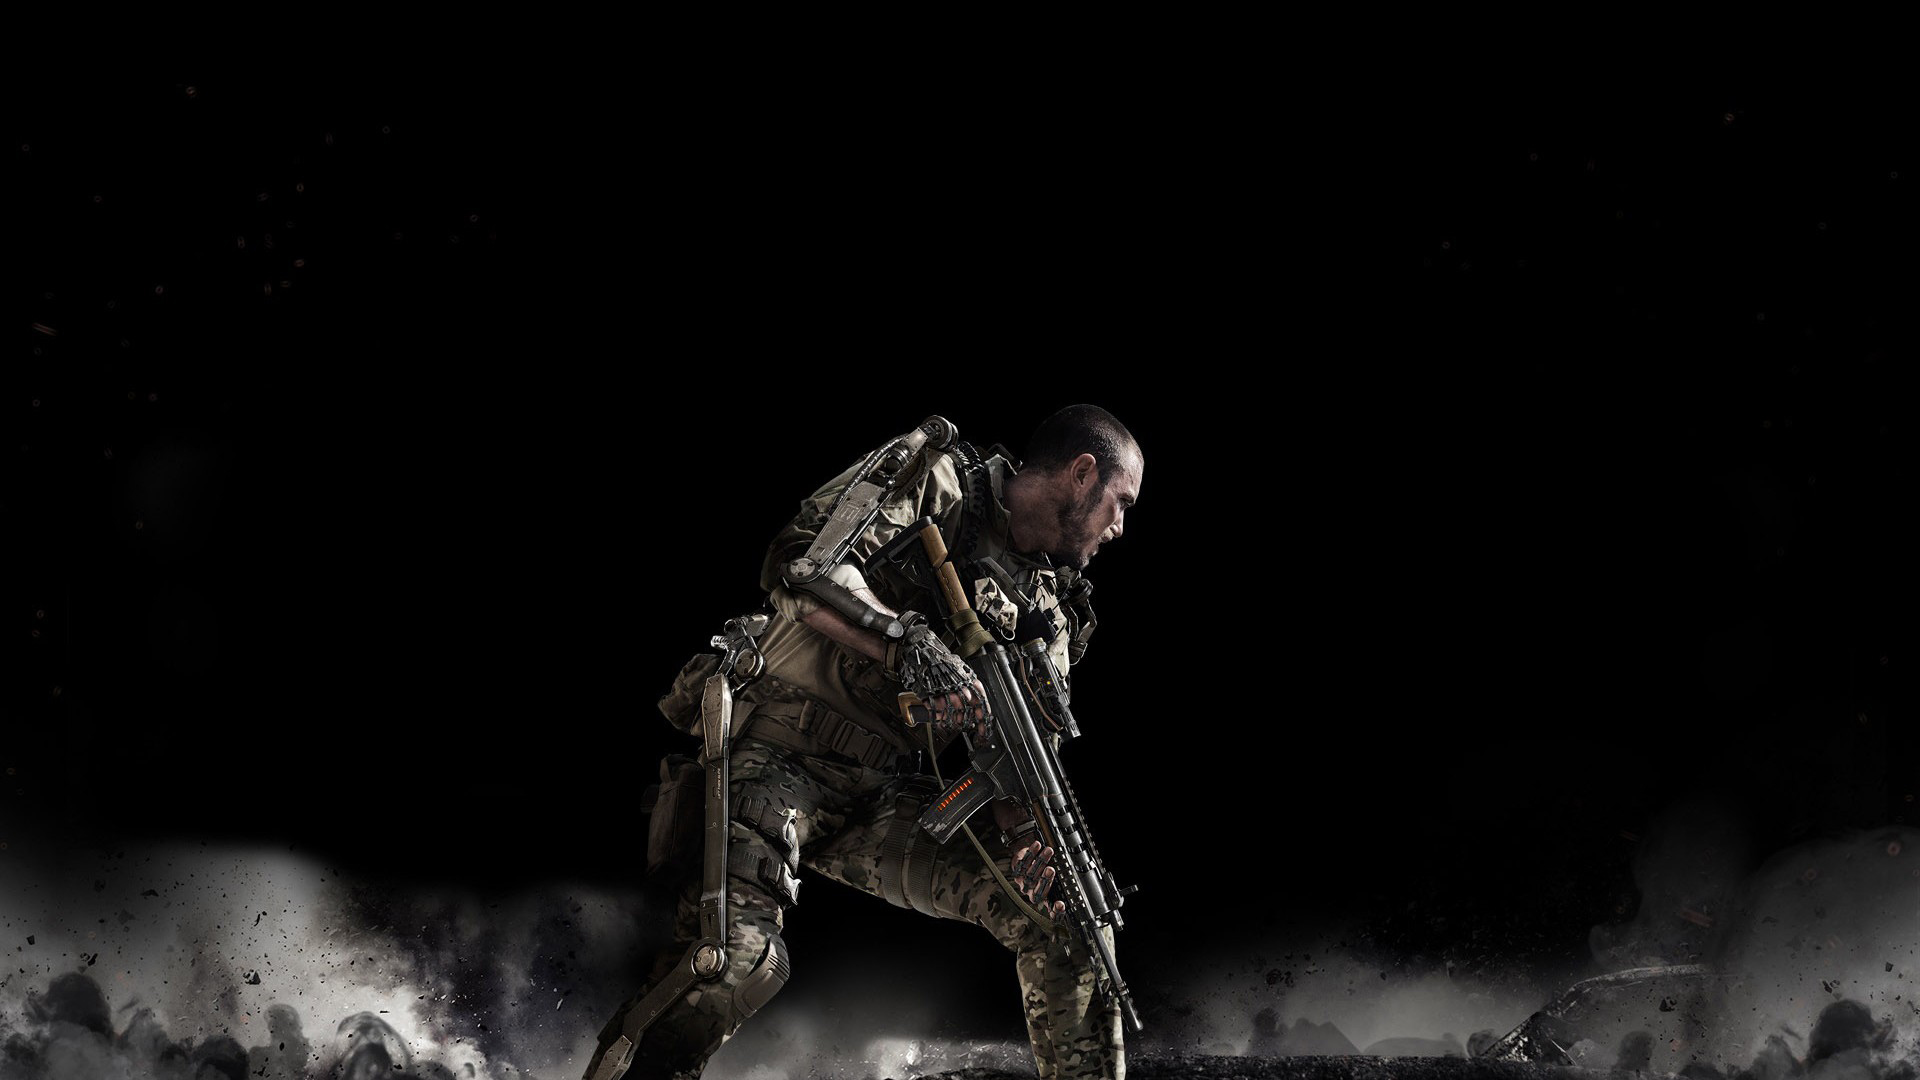 Call Of Duty Advanced Warfare HD Wallpaper